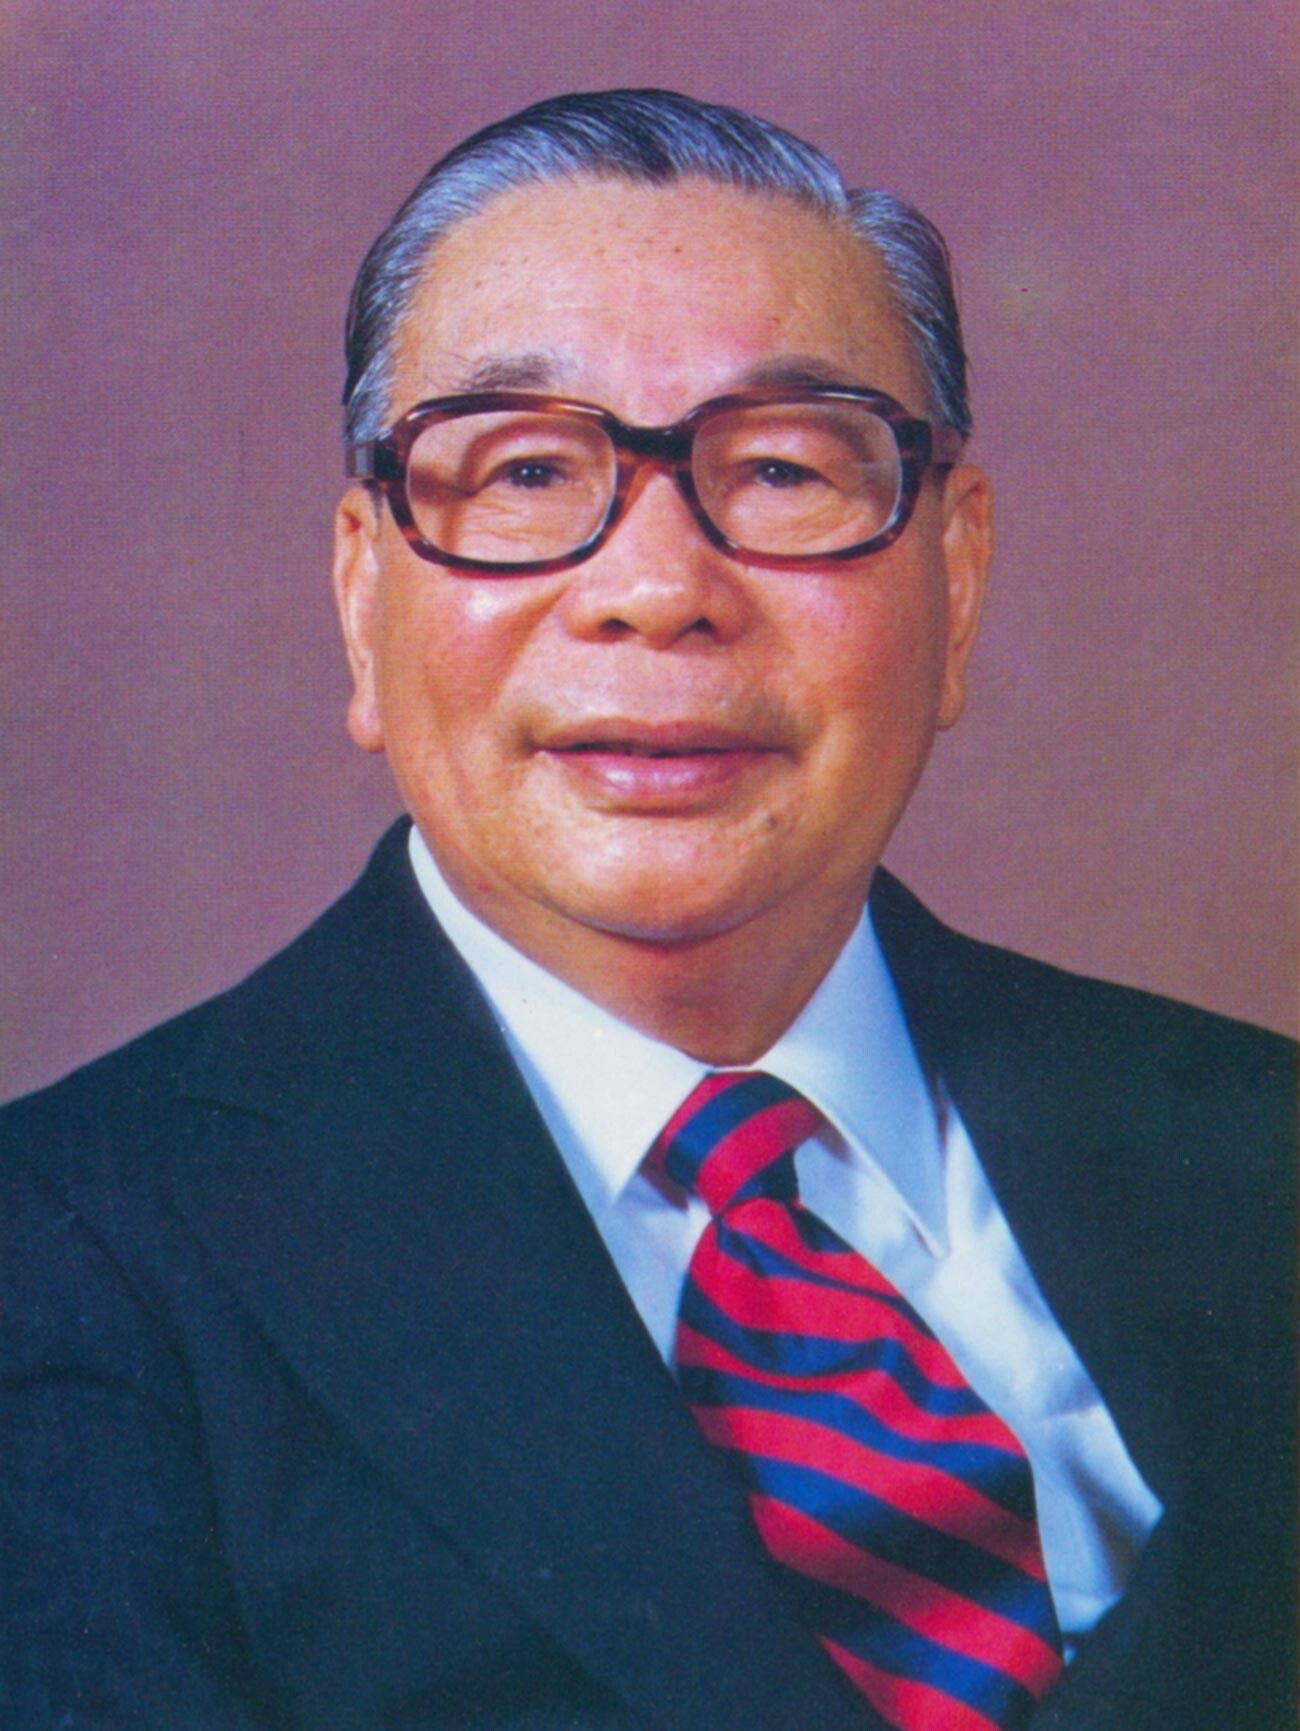 Chiang Ching-kuo, President of Republic of China (Taiwan).